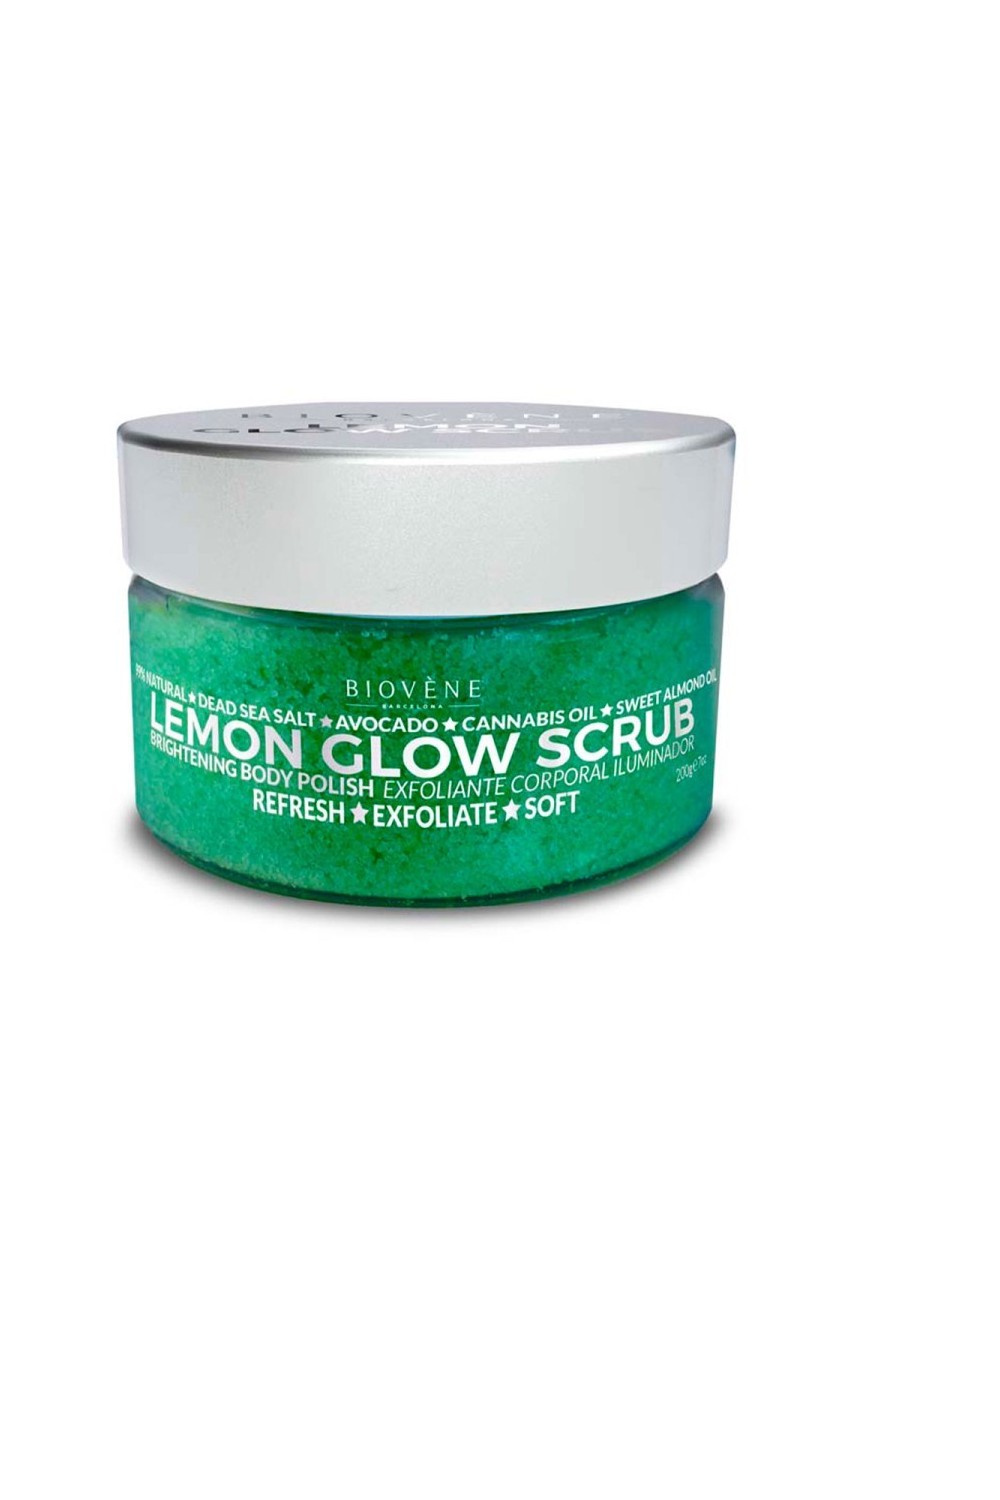 Biovene Lemon Glow Scrub Brightening Body Polish 200g